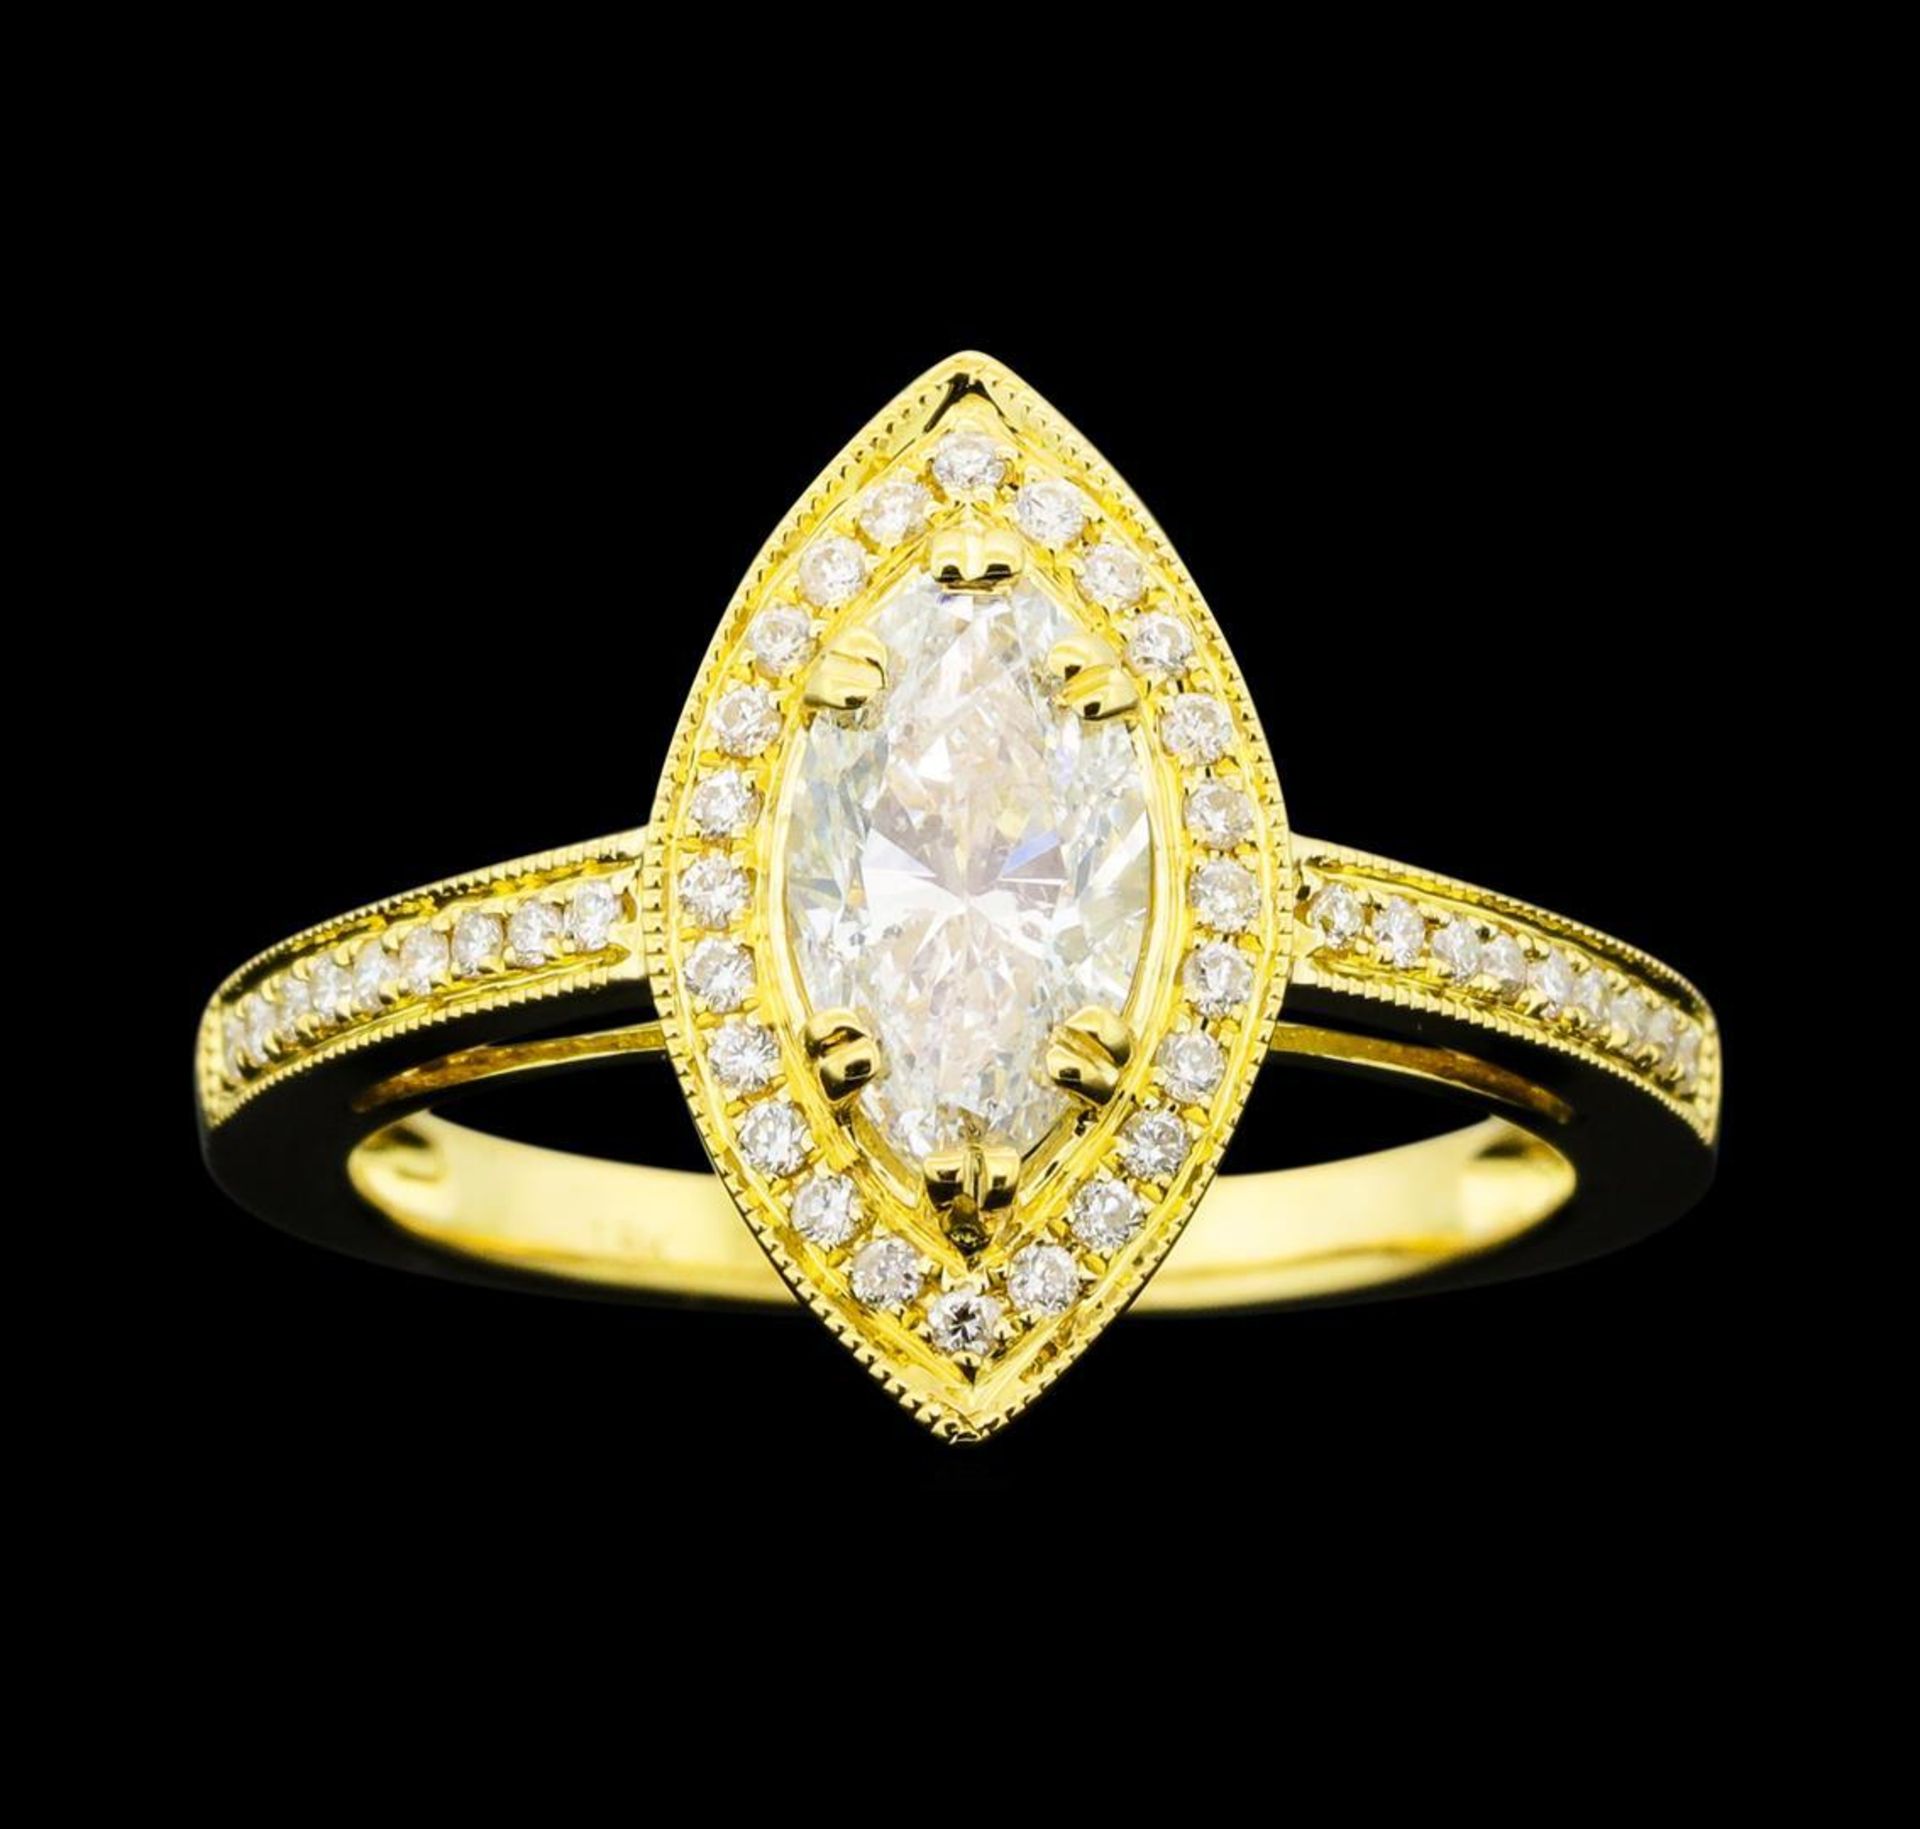 1.20 ctw Diamond Ring - 18KT Yellow Gold - Image 2 of 5